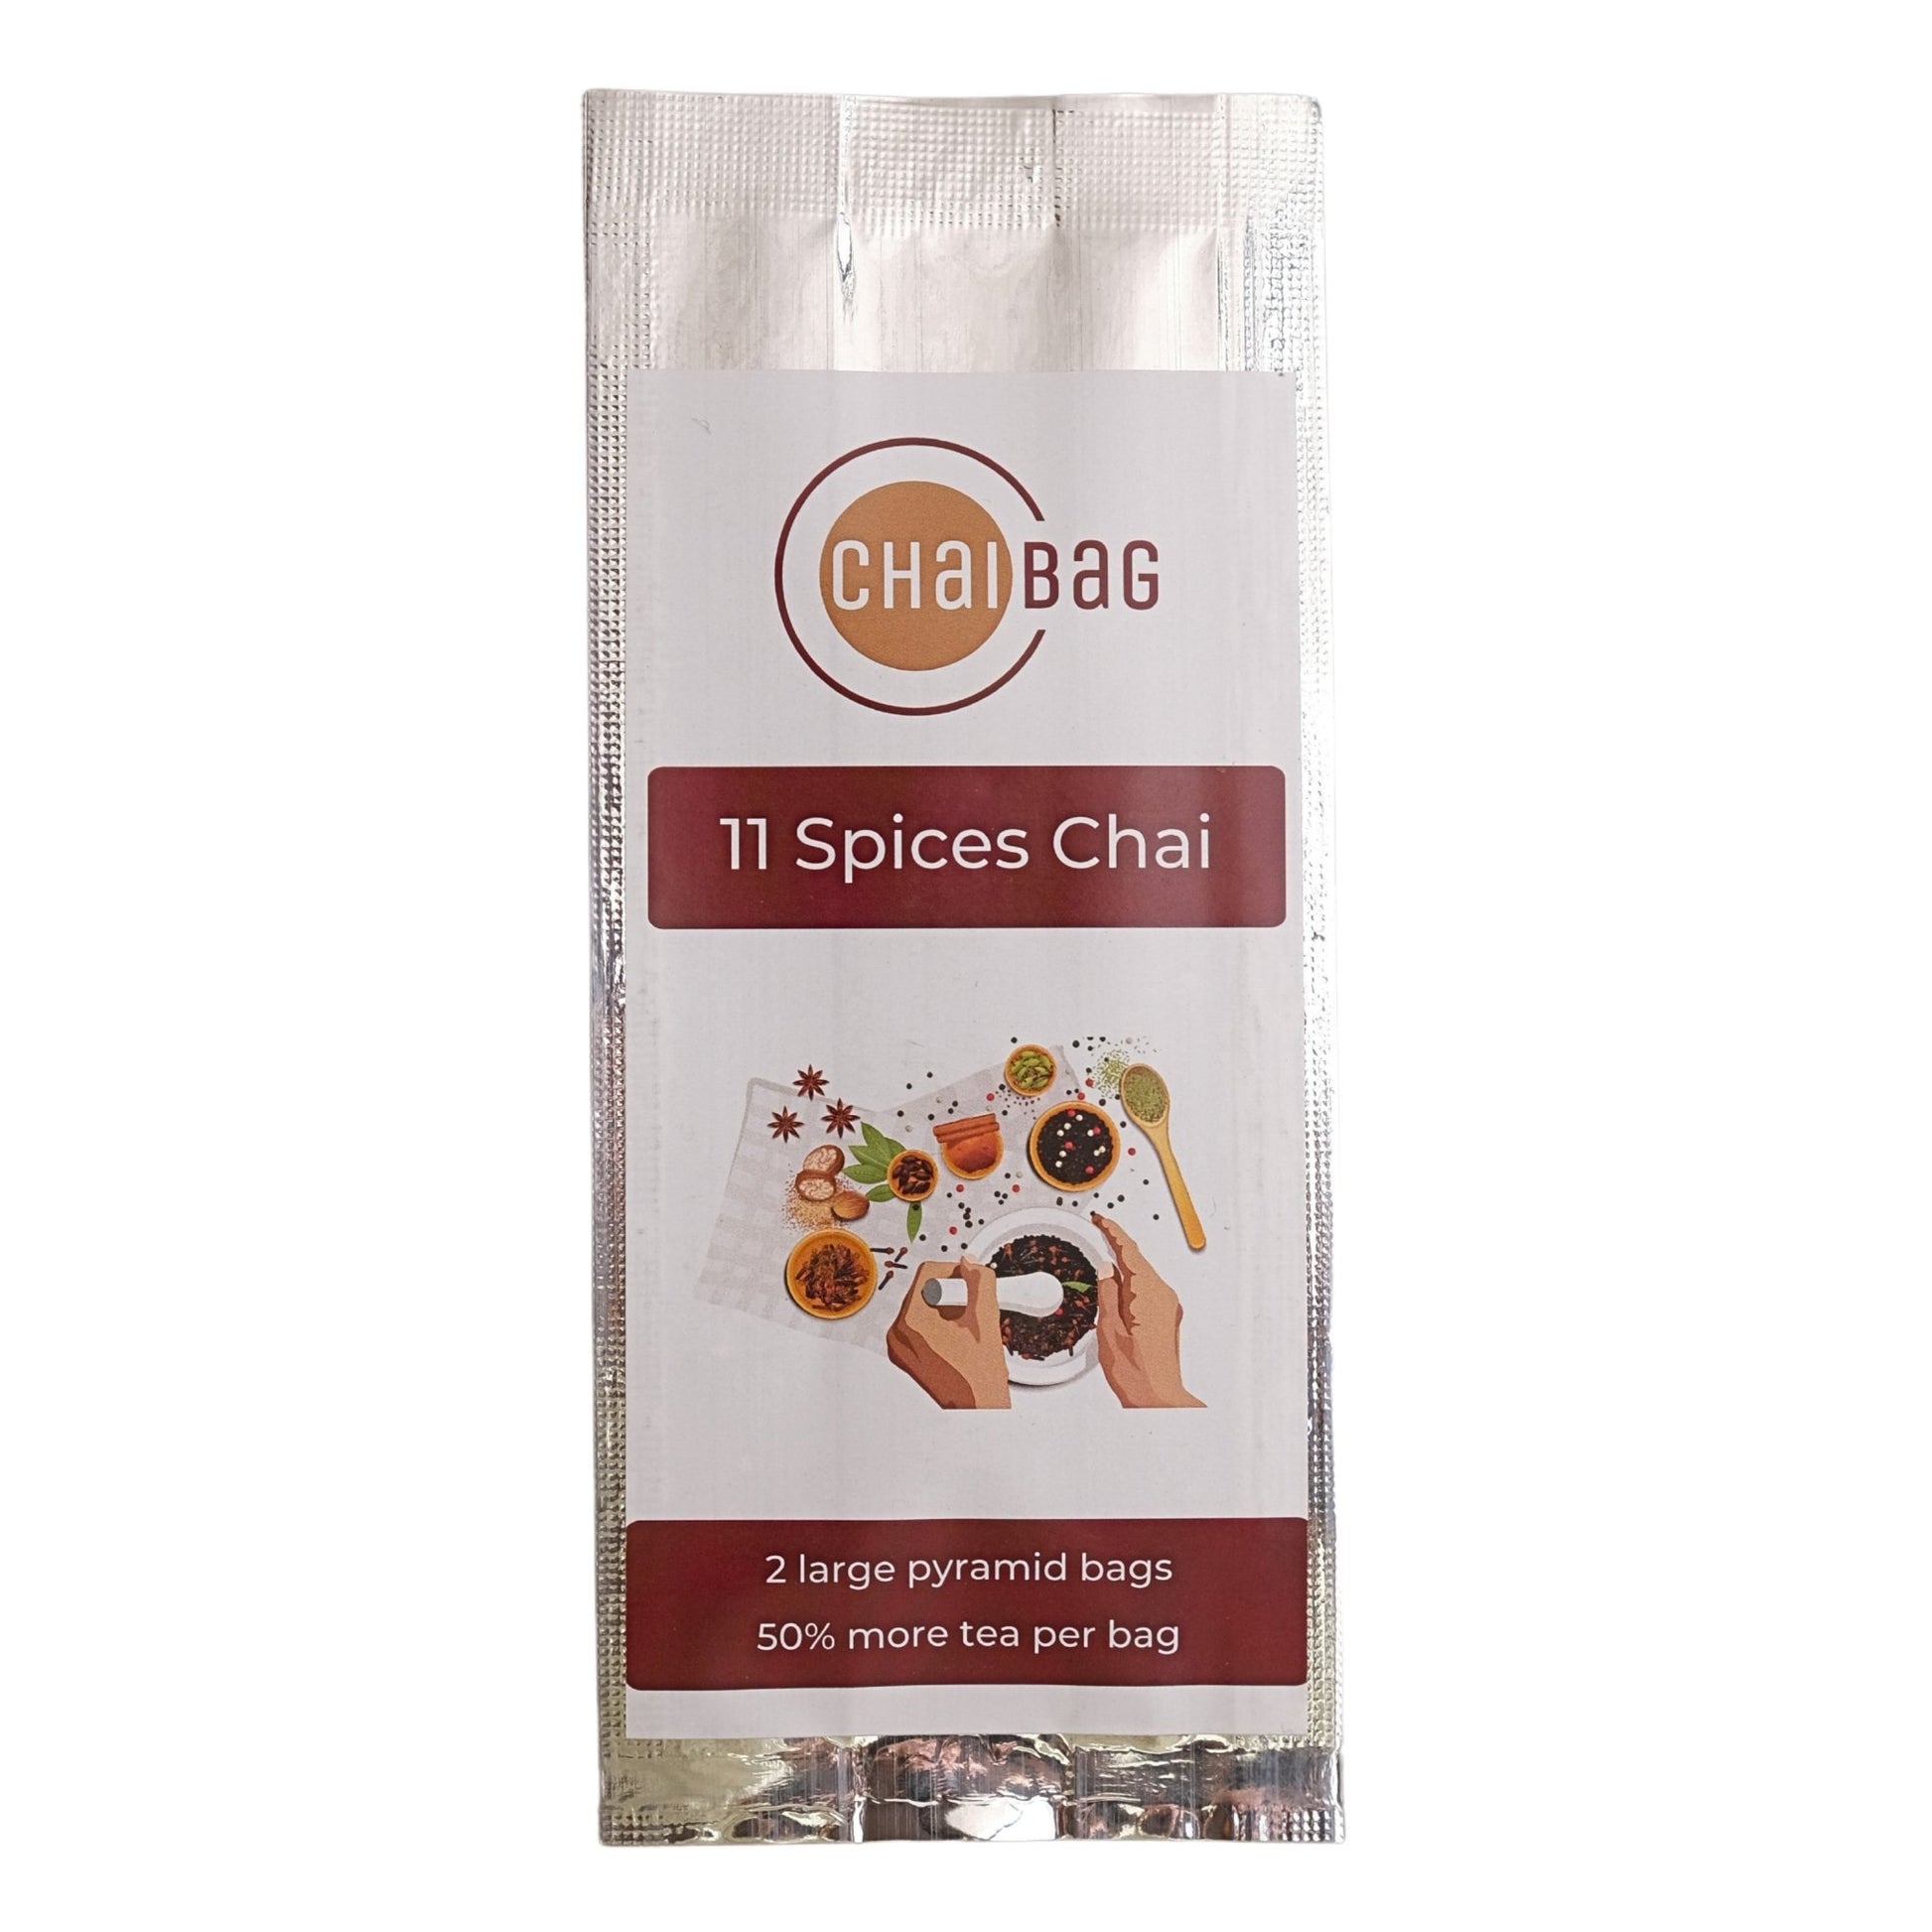 11 Spices Chai Sample - ChaiBag